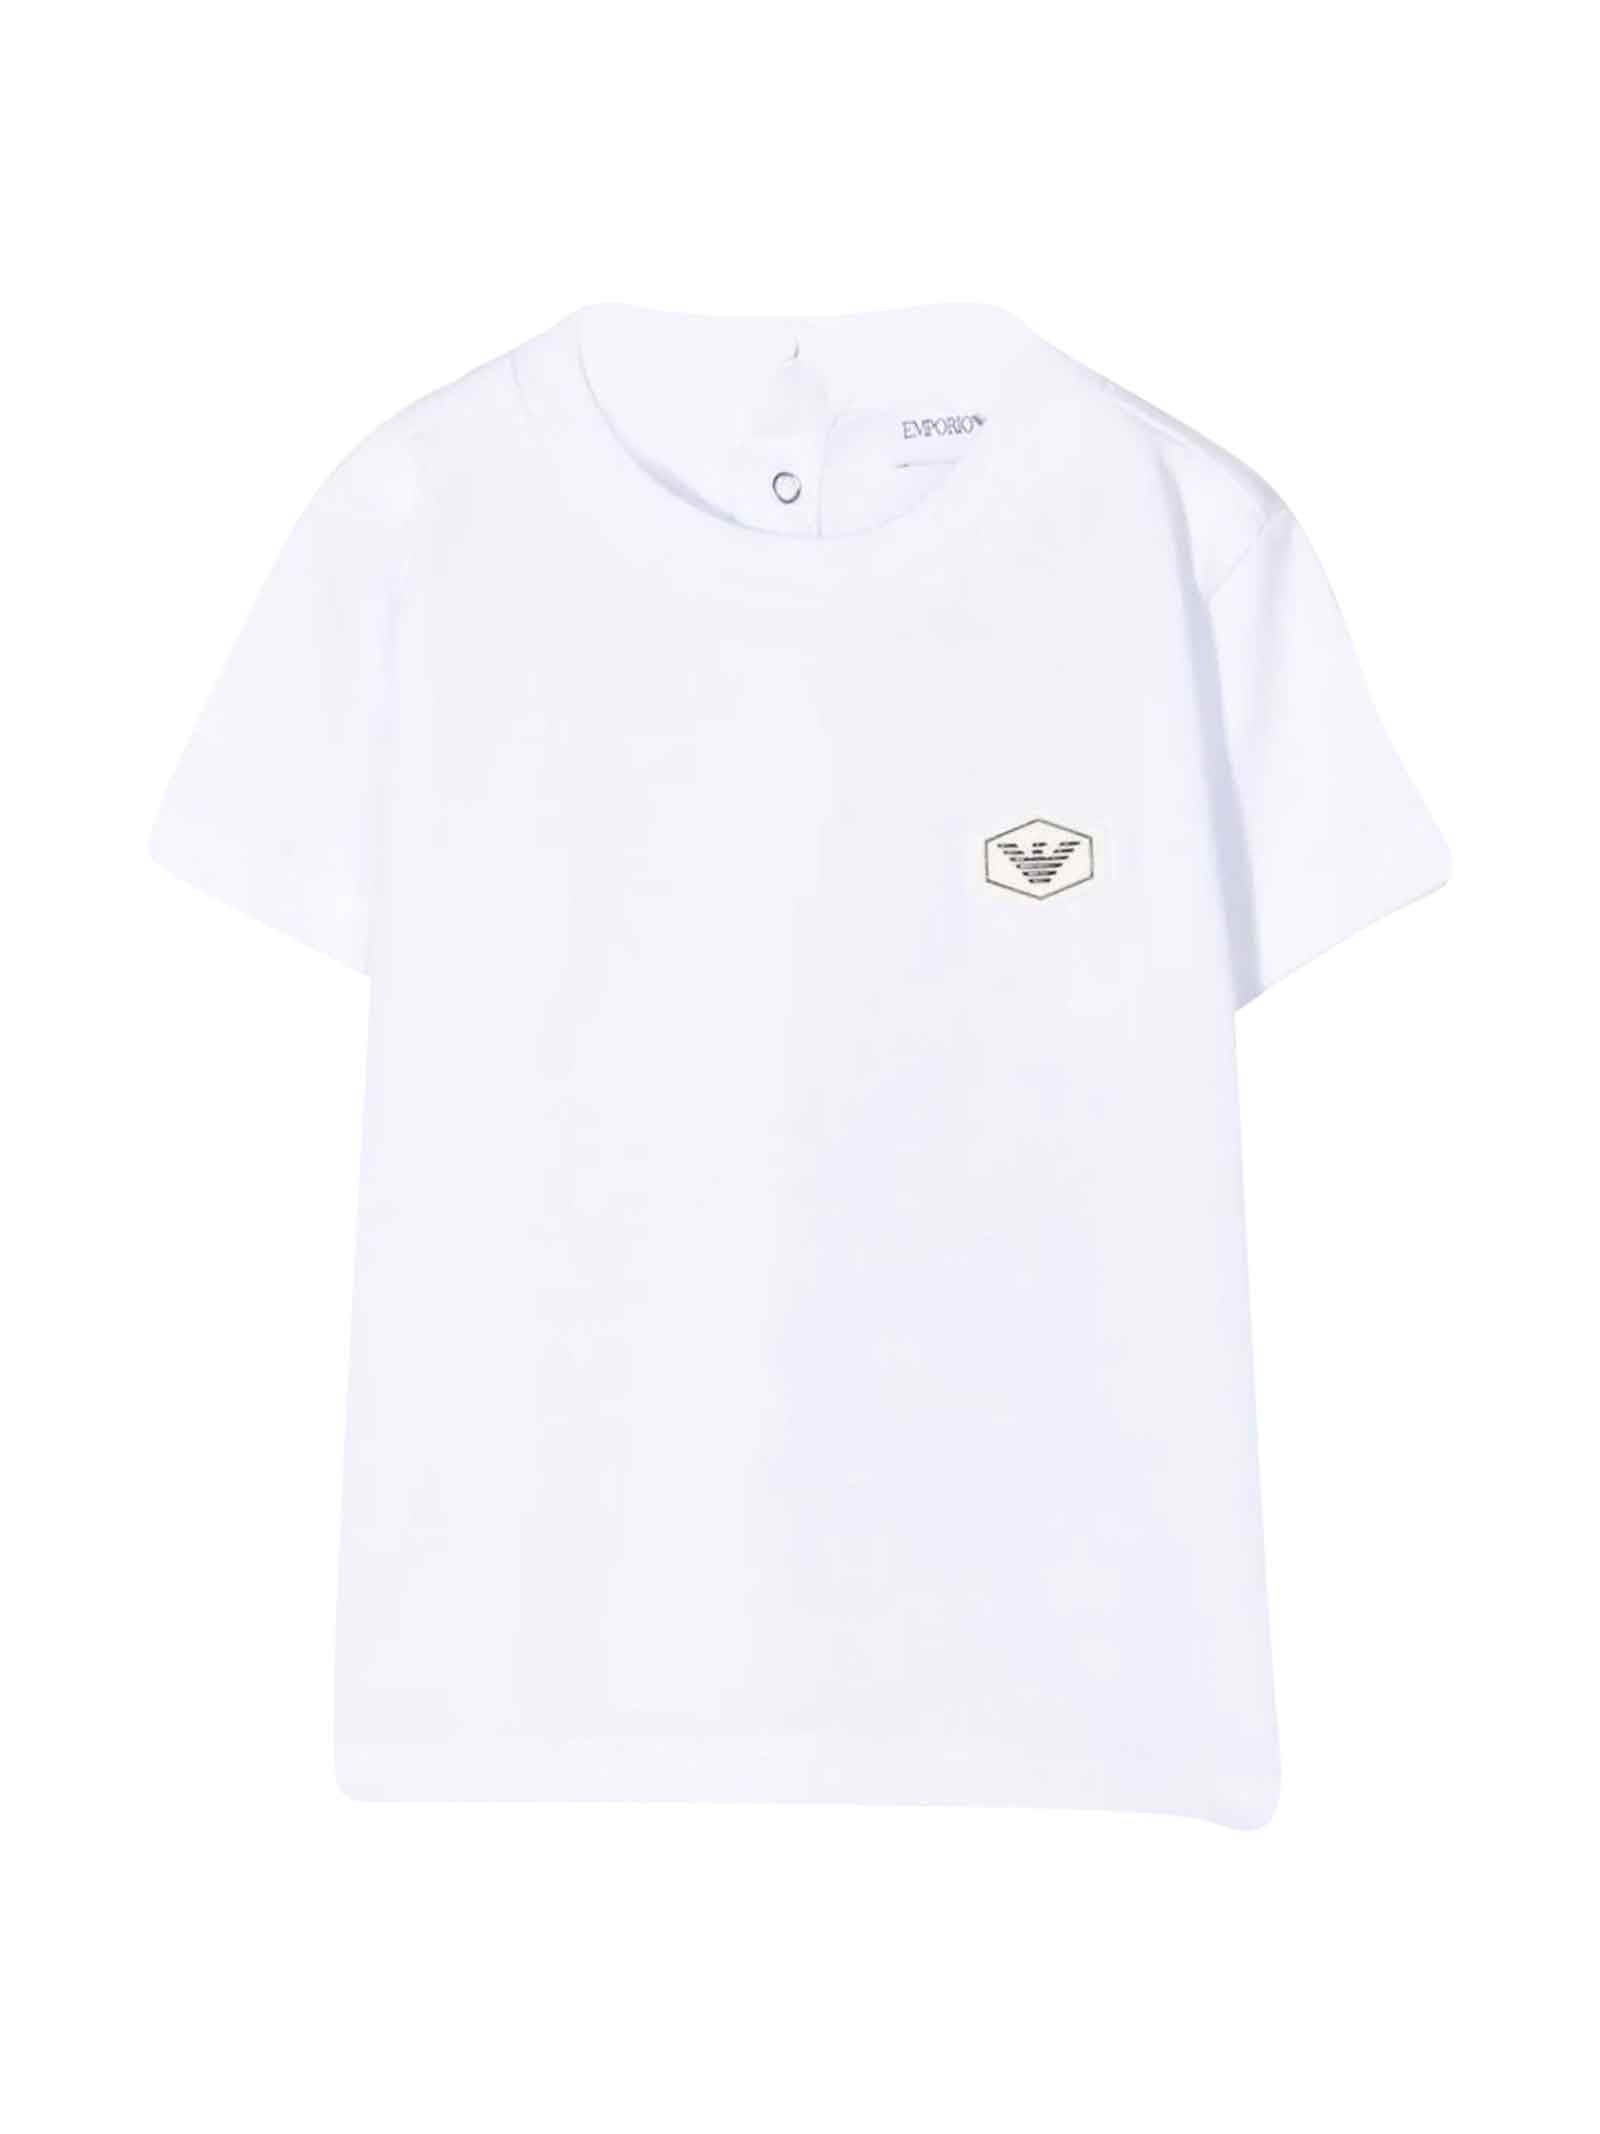 Emporio Armani White T-shirt Baby Boy